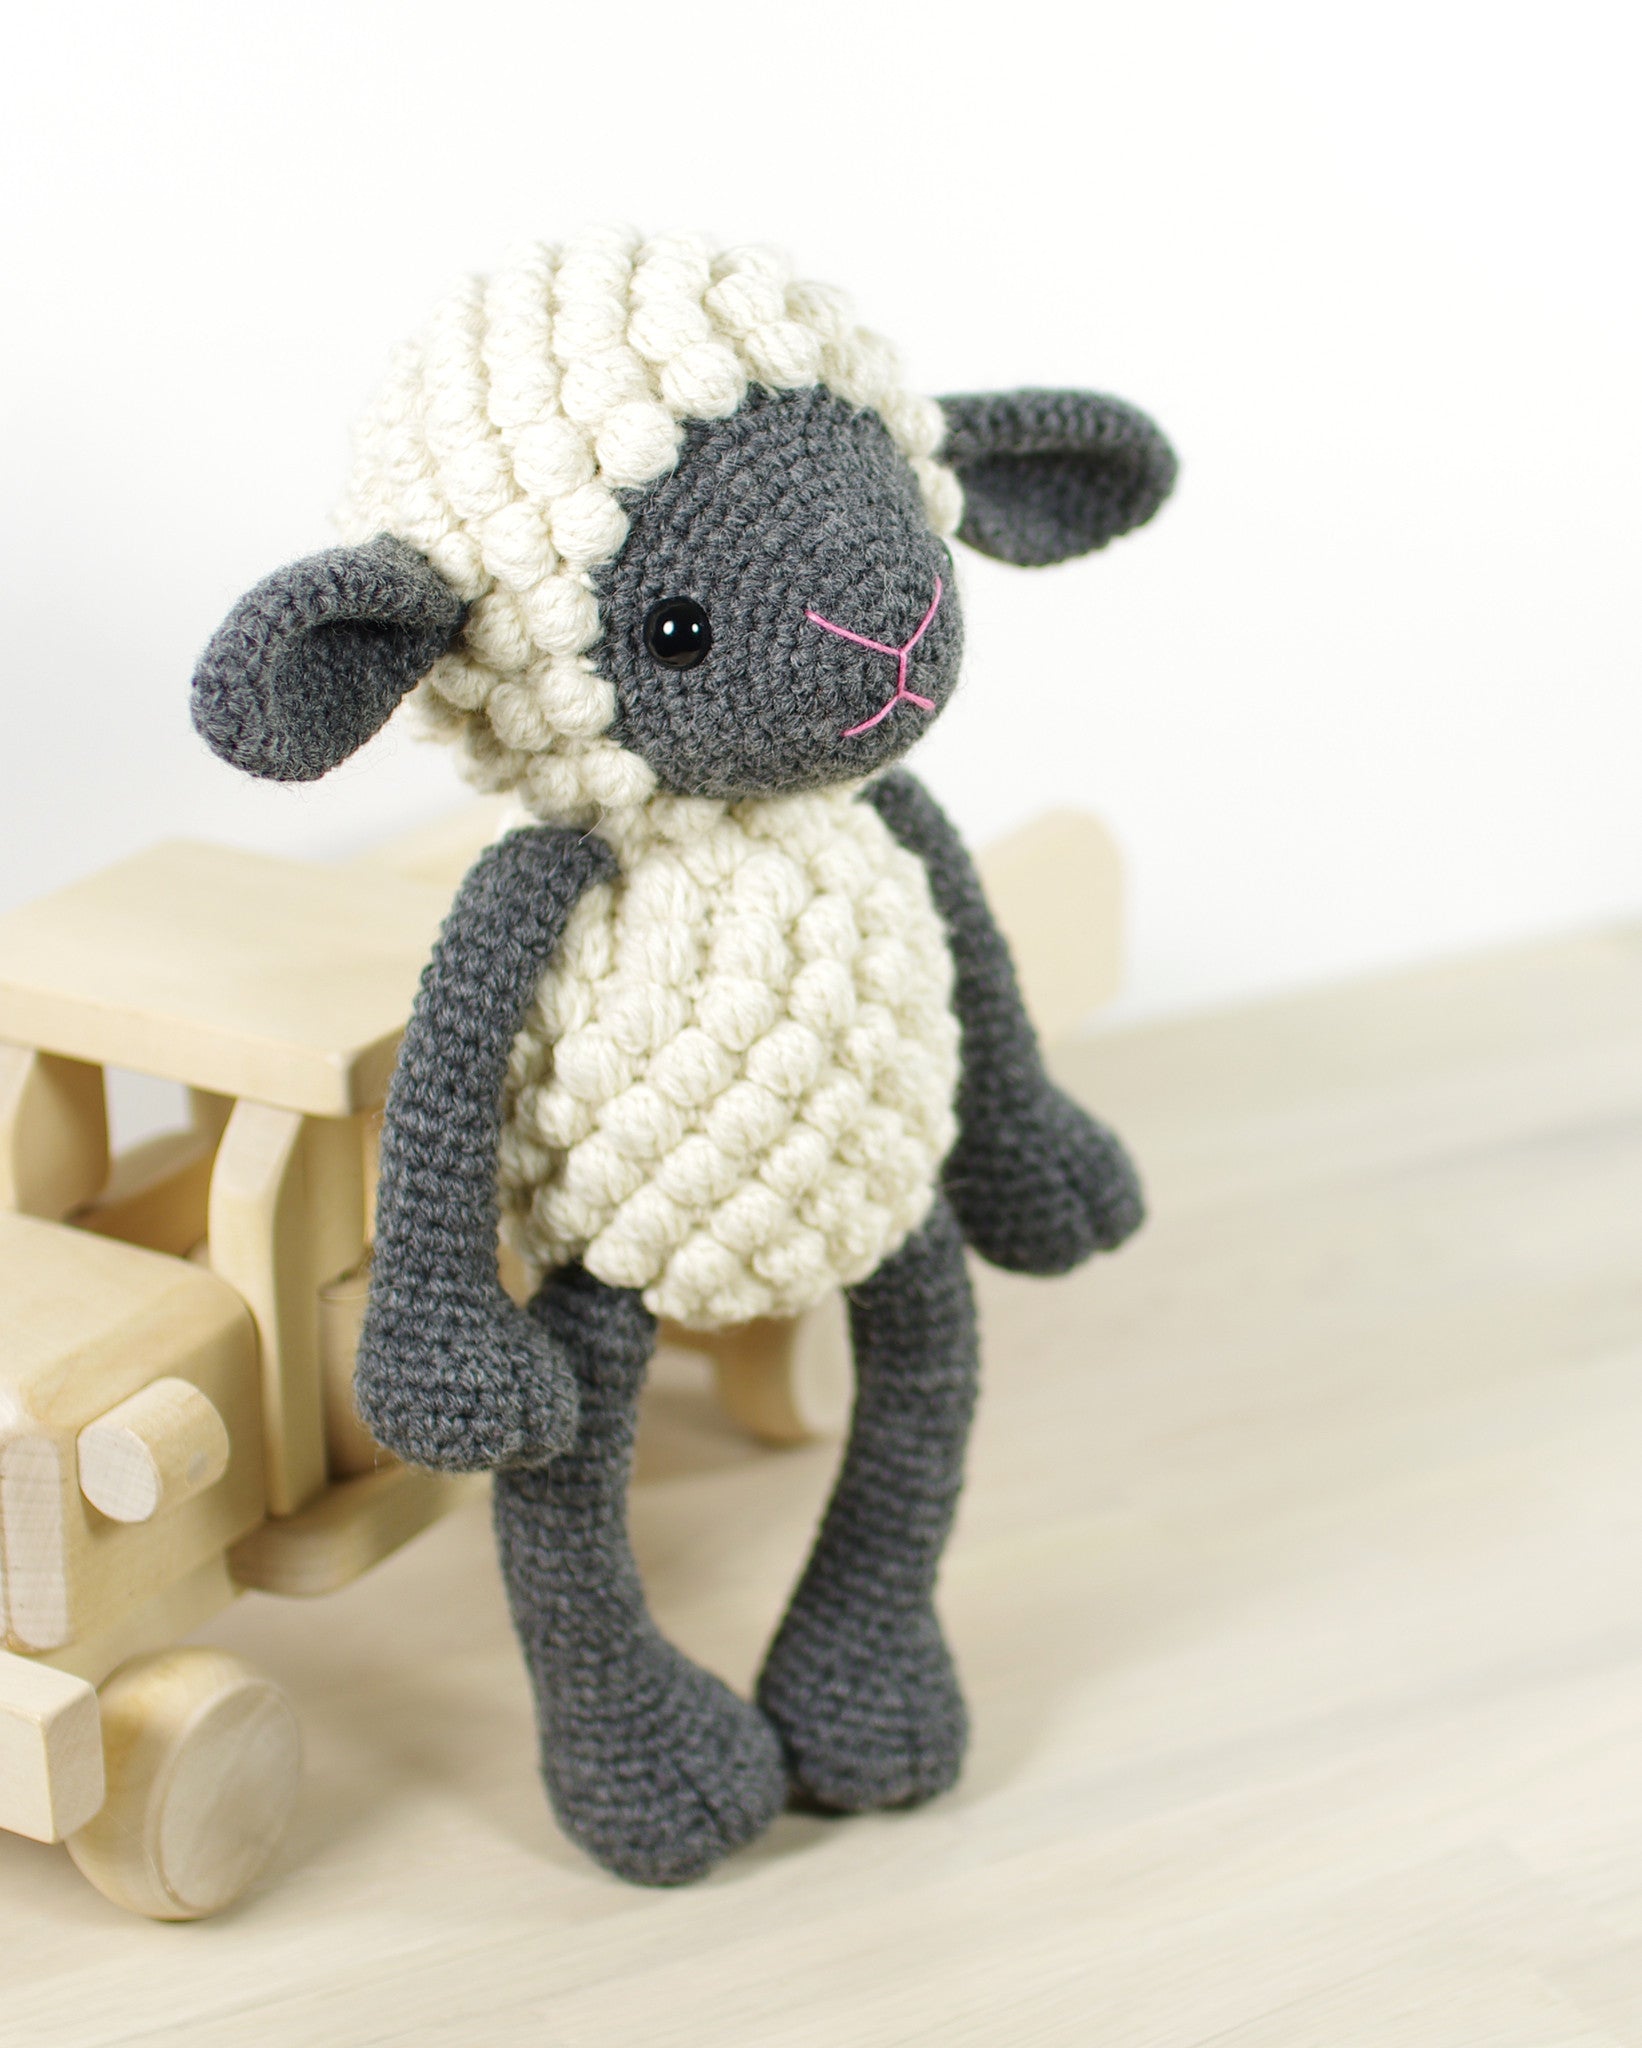 Cuddly sheep crochet pattern